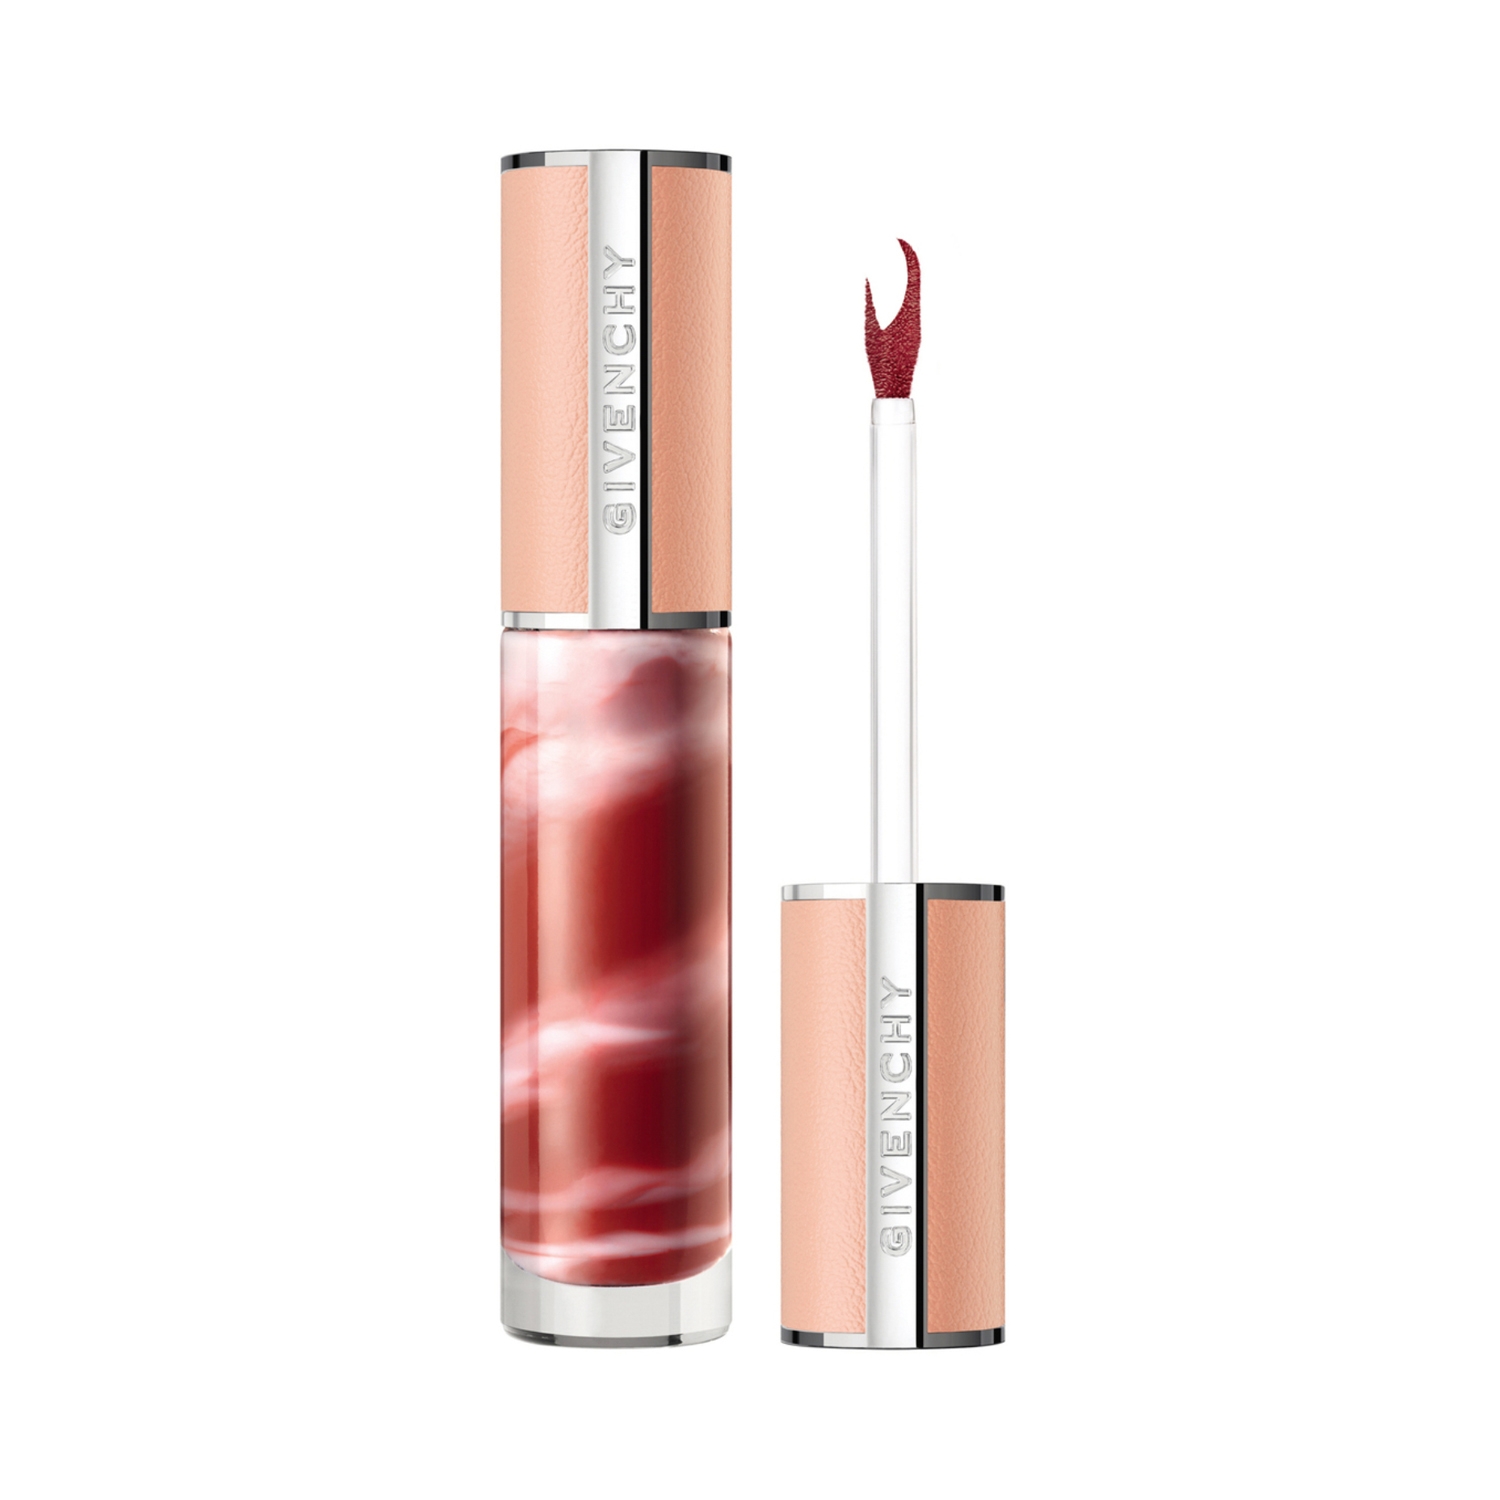 Givenchy | Givenchy Rose Perfecto Liquid Lip Balm - N 117 Chilling Brown (6ml)